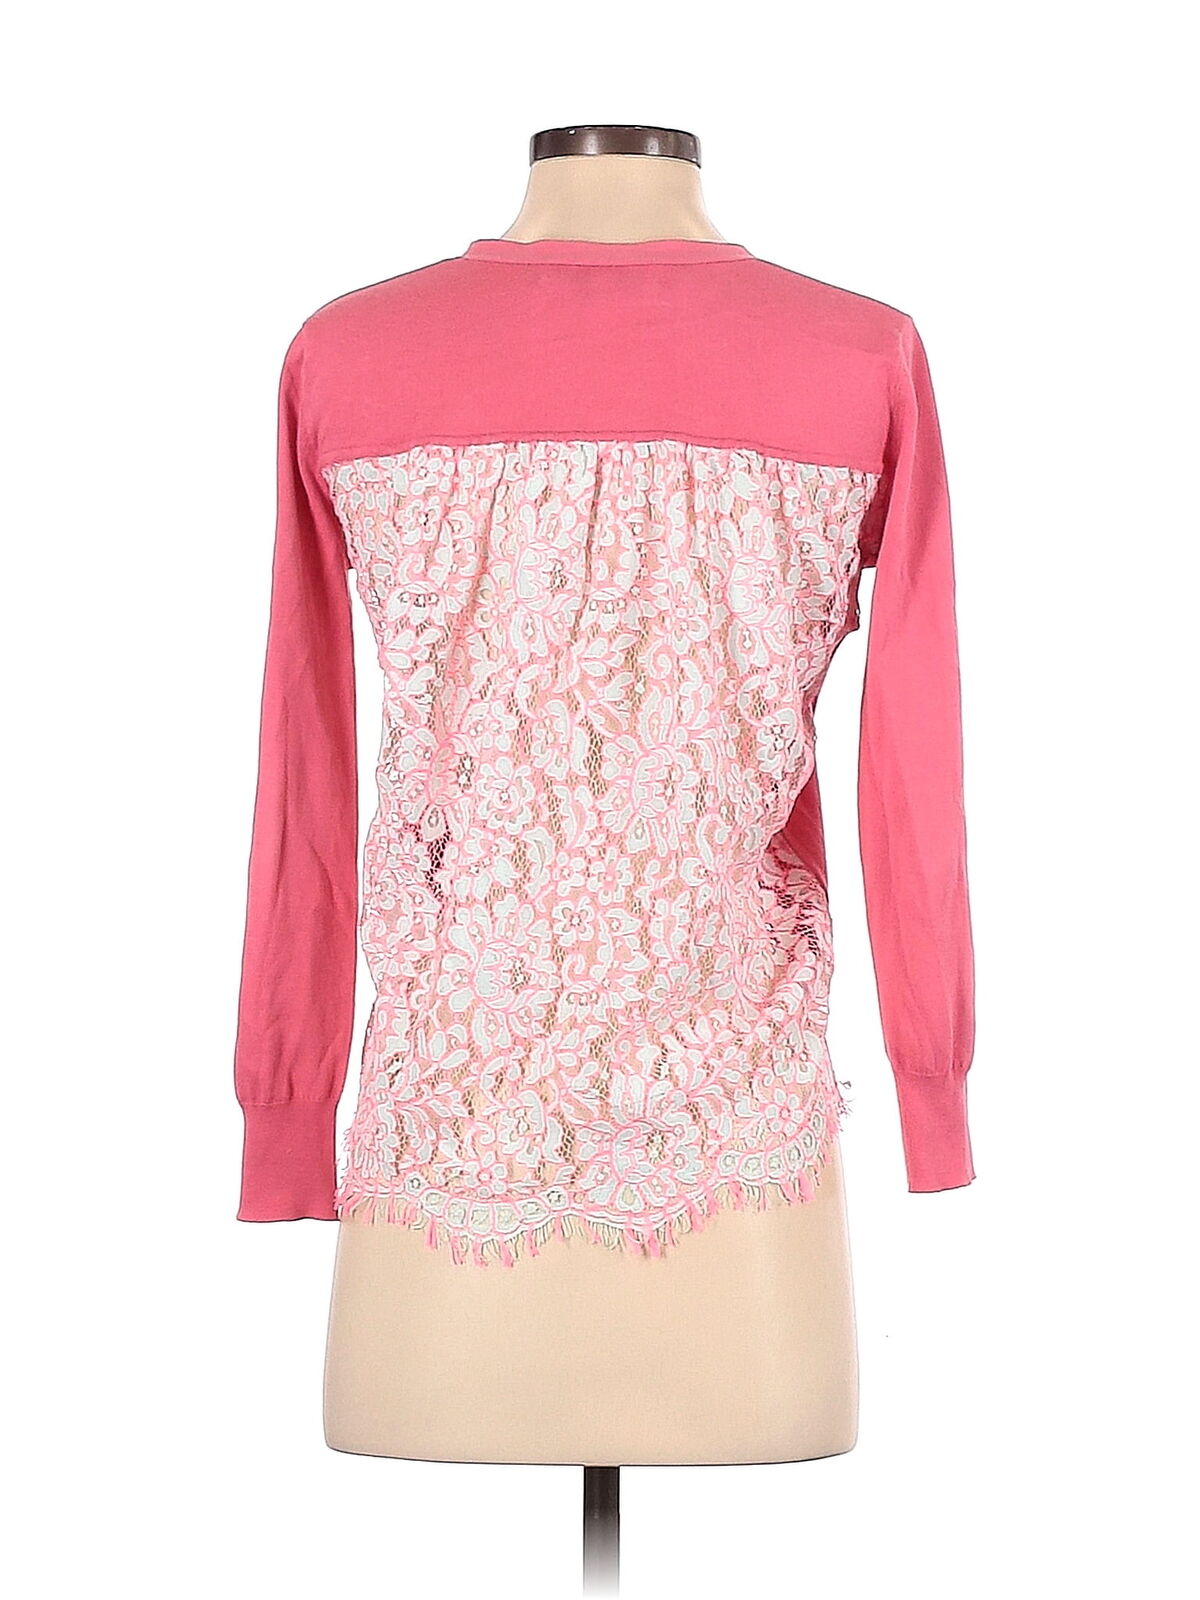 Juicy Couture Women Pink Cardigan XS - image 2